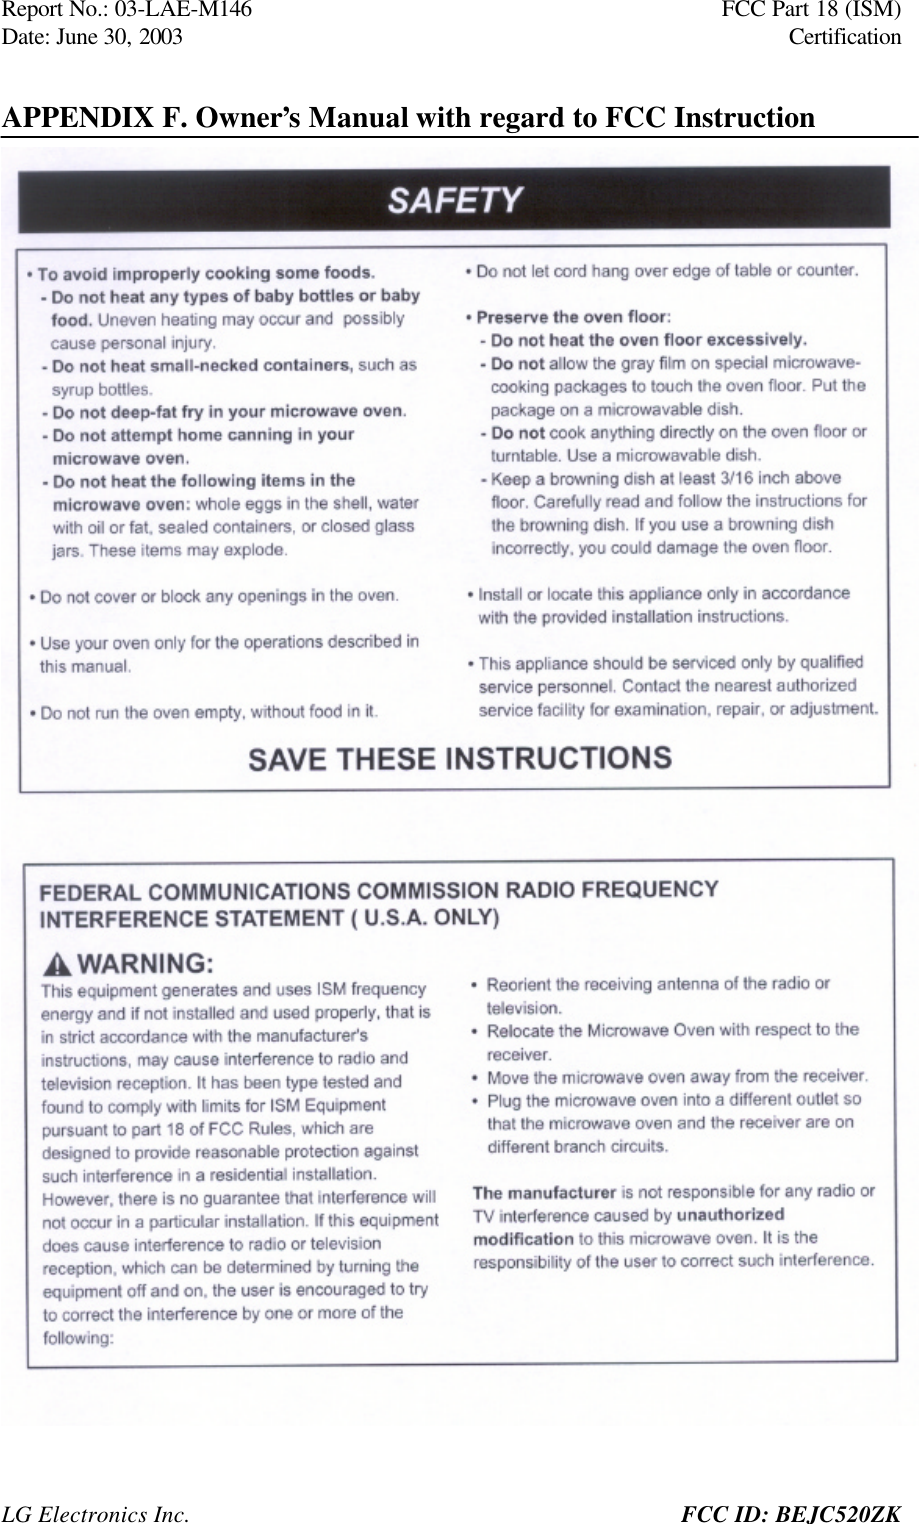  Report No.: 03-LAE-M146    FCC Part 18 (ISM) Date: June 30, 2003    Certification LG Electronics Inc.    FCC ID: BEJC520ZK APPENDIX F. Owner’s Manual with regard to FCC Instruction  